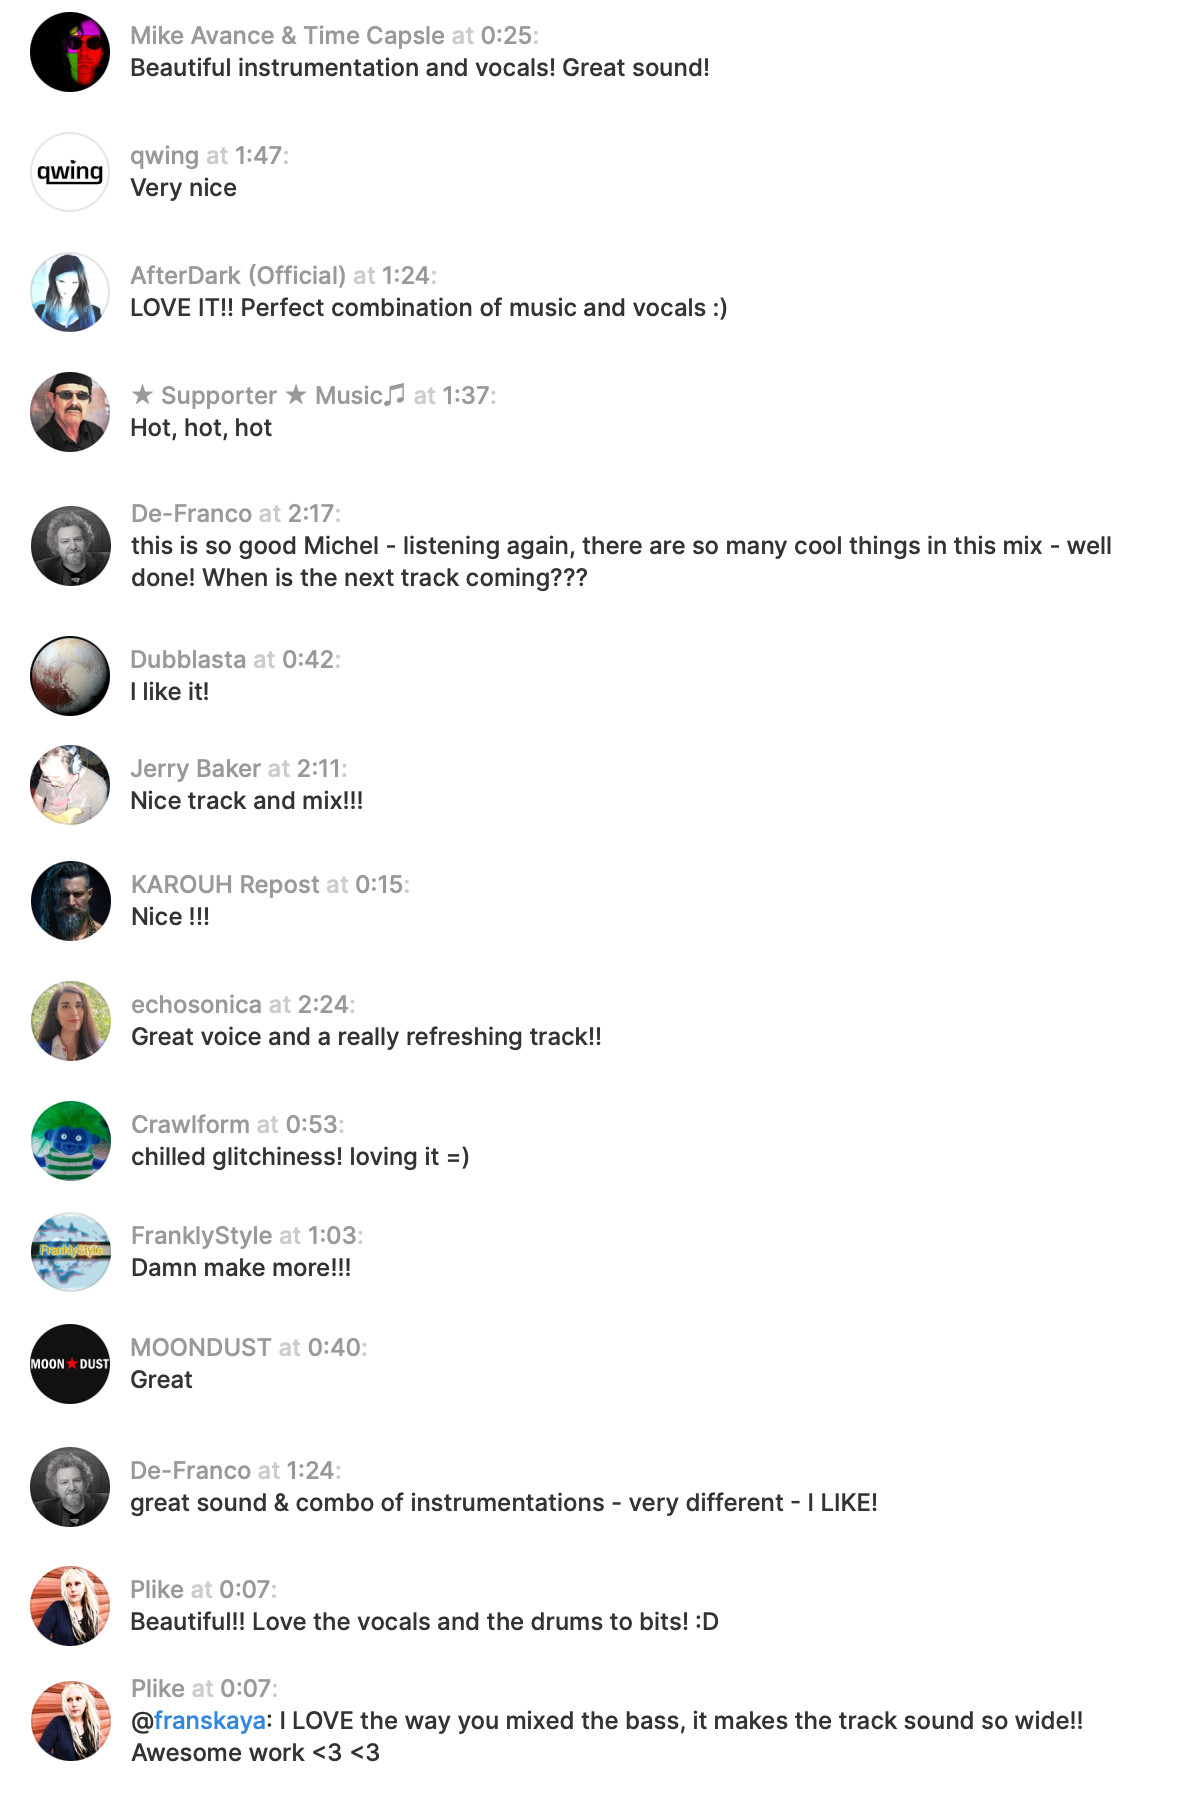 Comments on Soundcloud.com about Franskaya's single 'Circles'